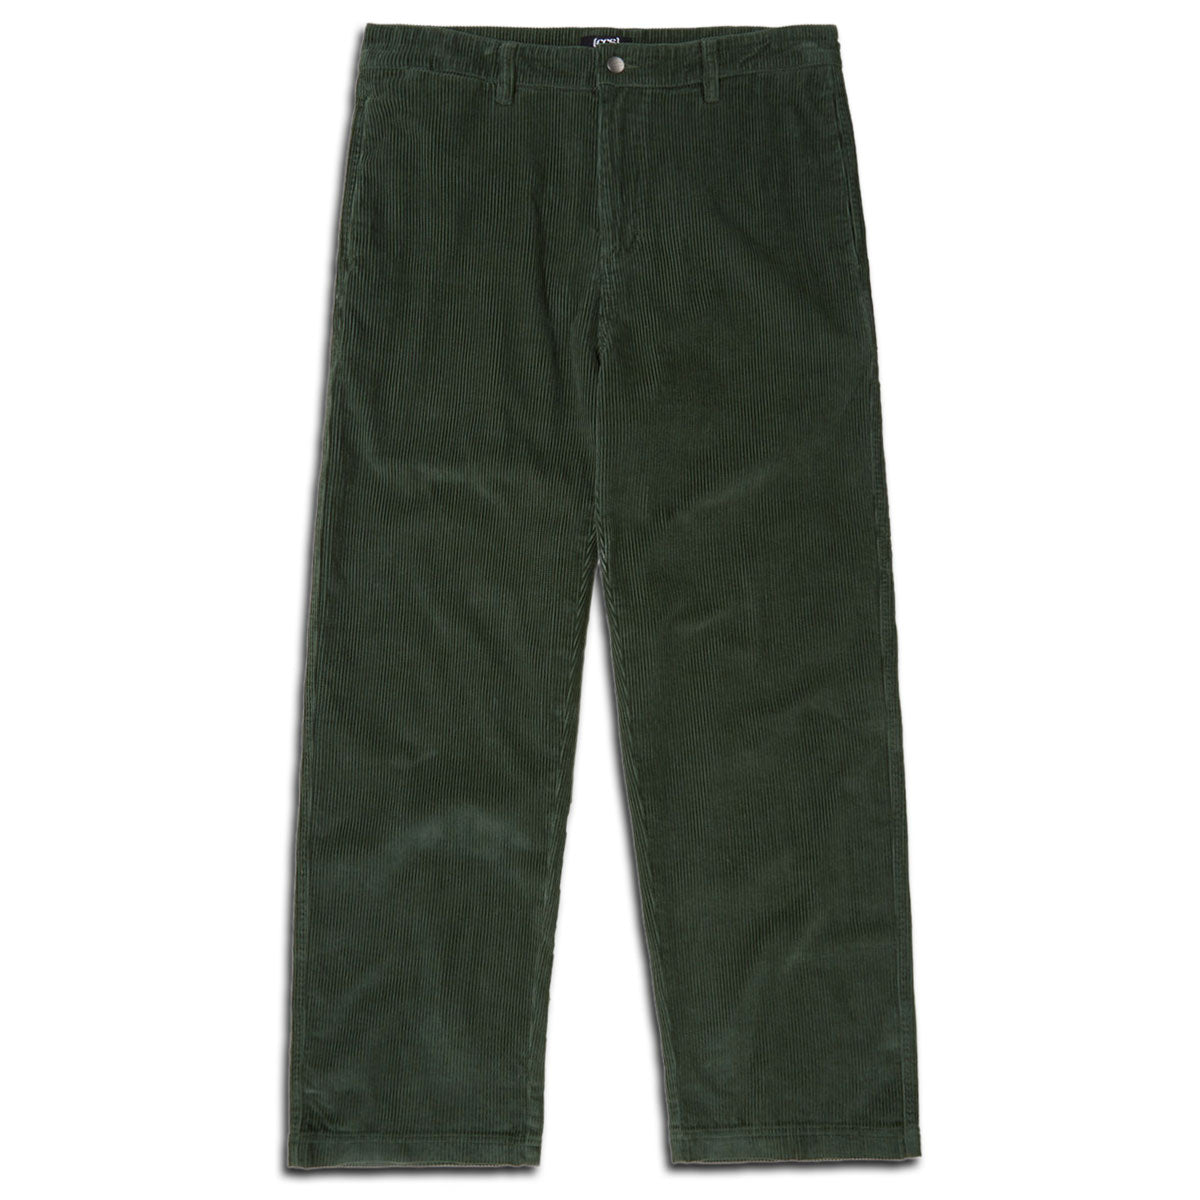 CCS Original Relaxed Corduroy Pants - Green image 5